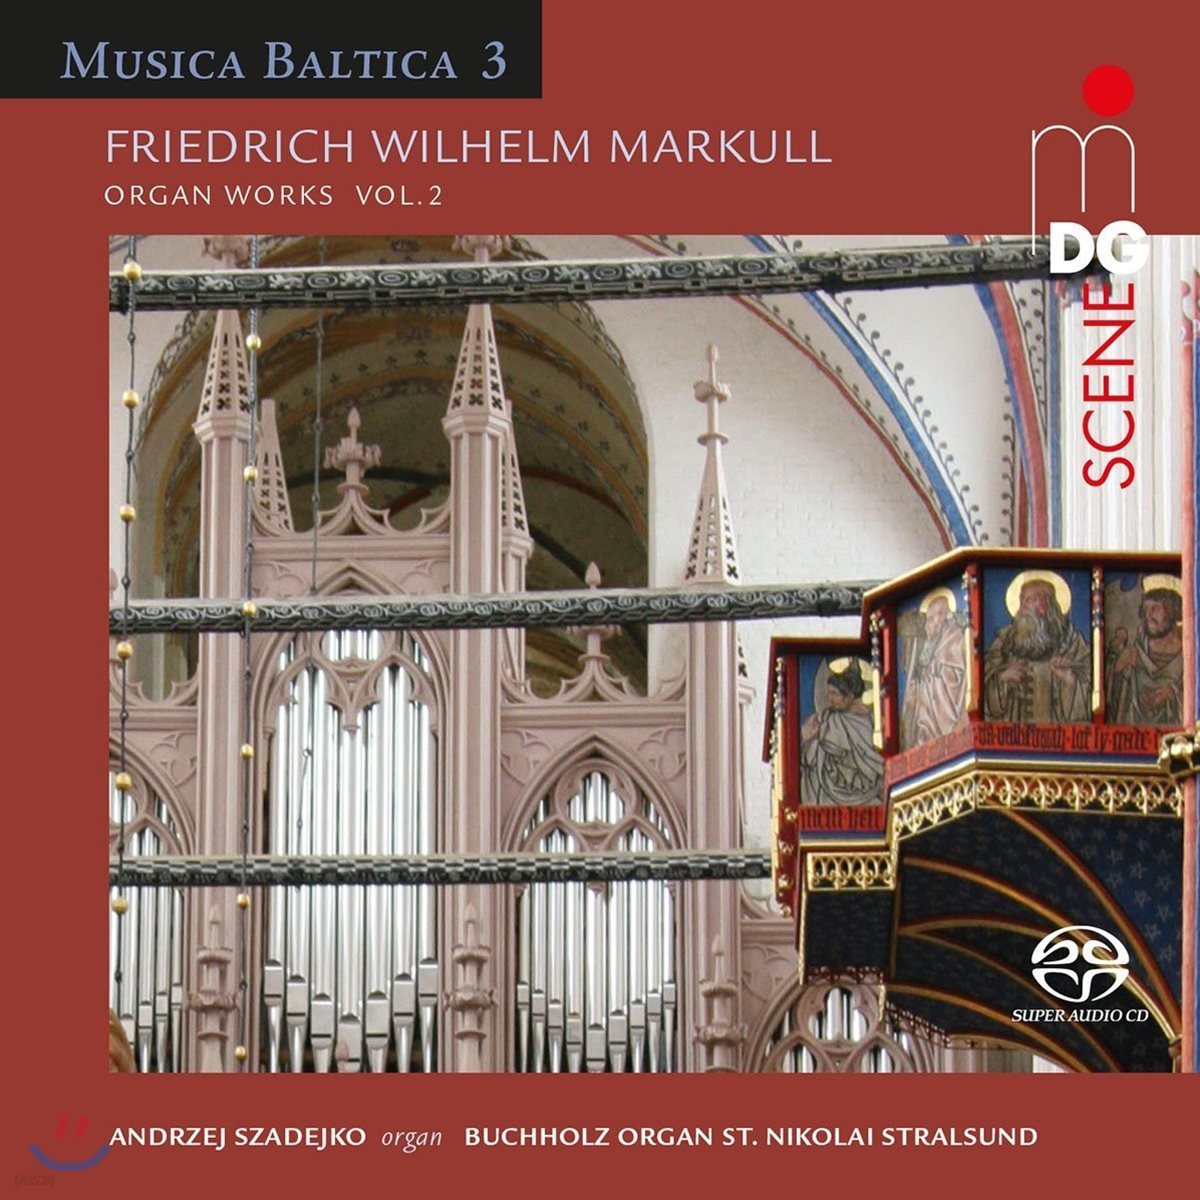 Andrzej Szadejko 프리드리히 빌헬름 마컬: 오르간 작품 2집 (Musica Baltica 3 - Friedrich Wilhelm Markull: Organ Works Vol.2)